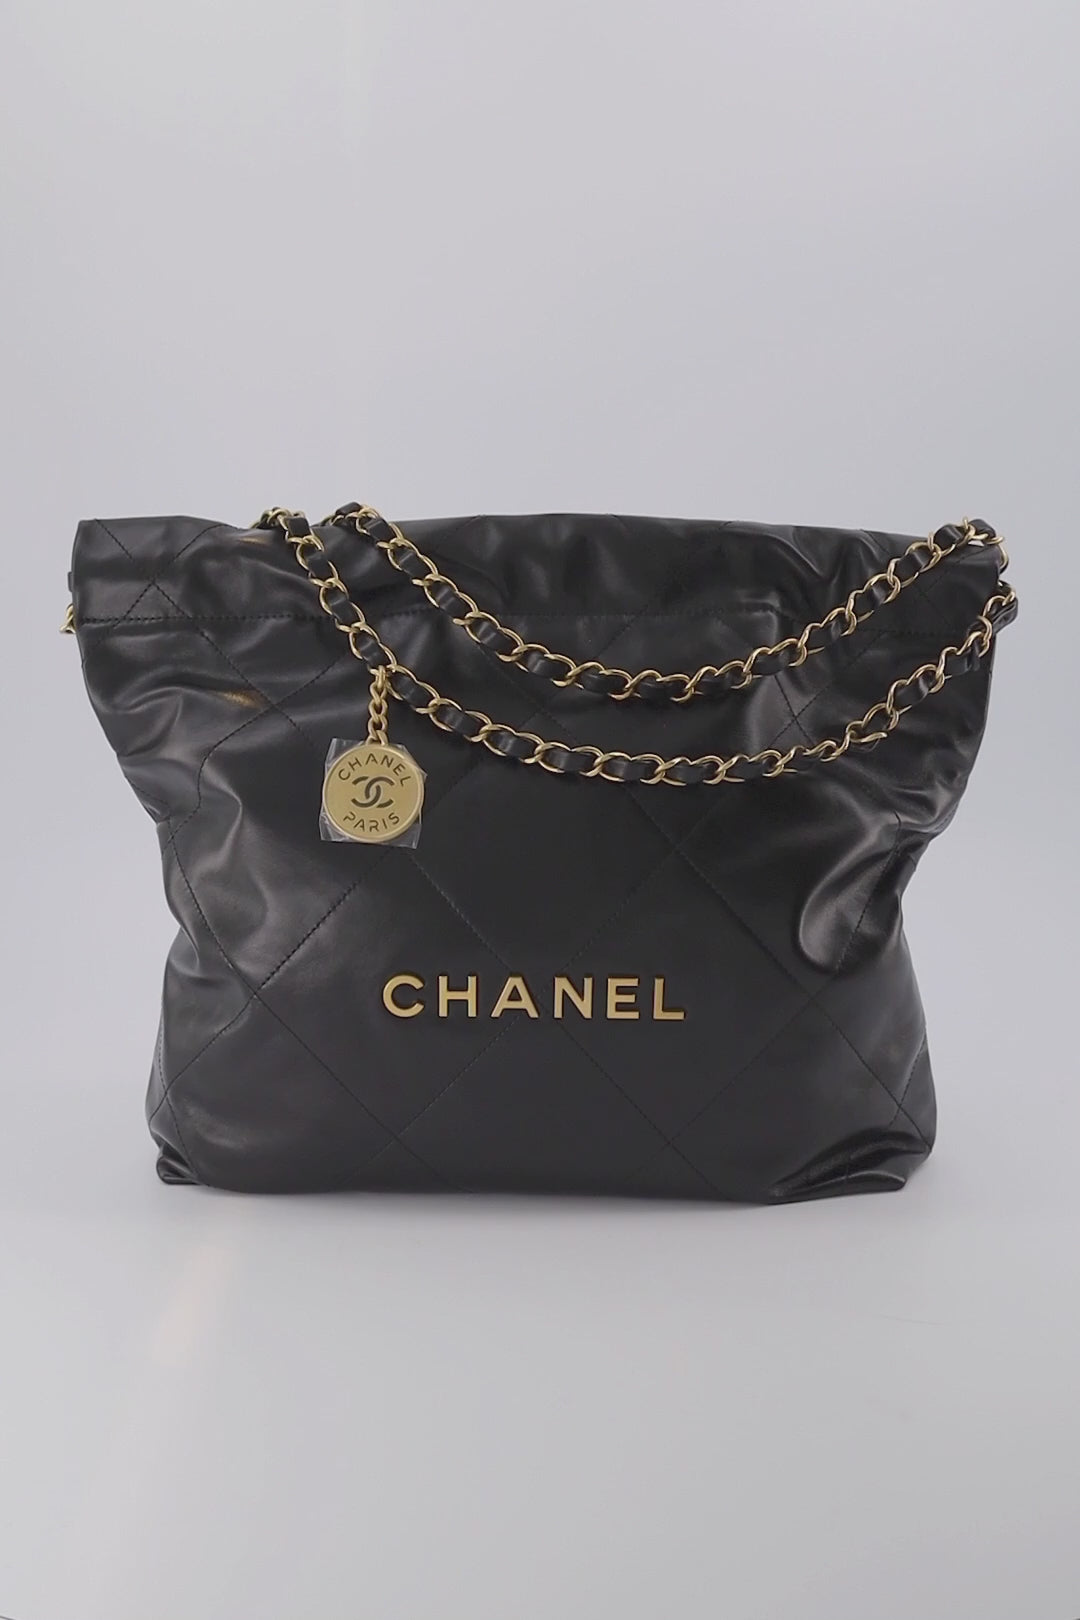 CHANEL Shiny Aged Calfskin Shopping Bag Black | FASHIONPHILE